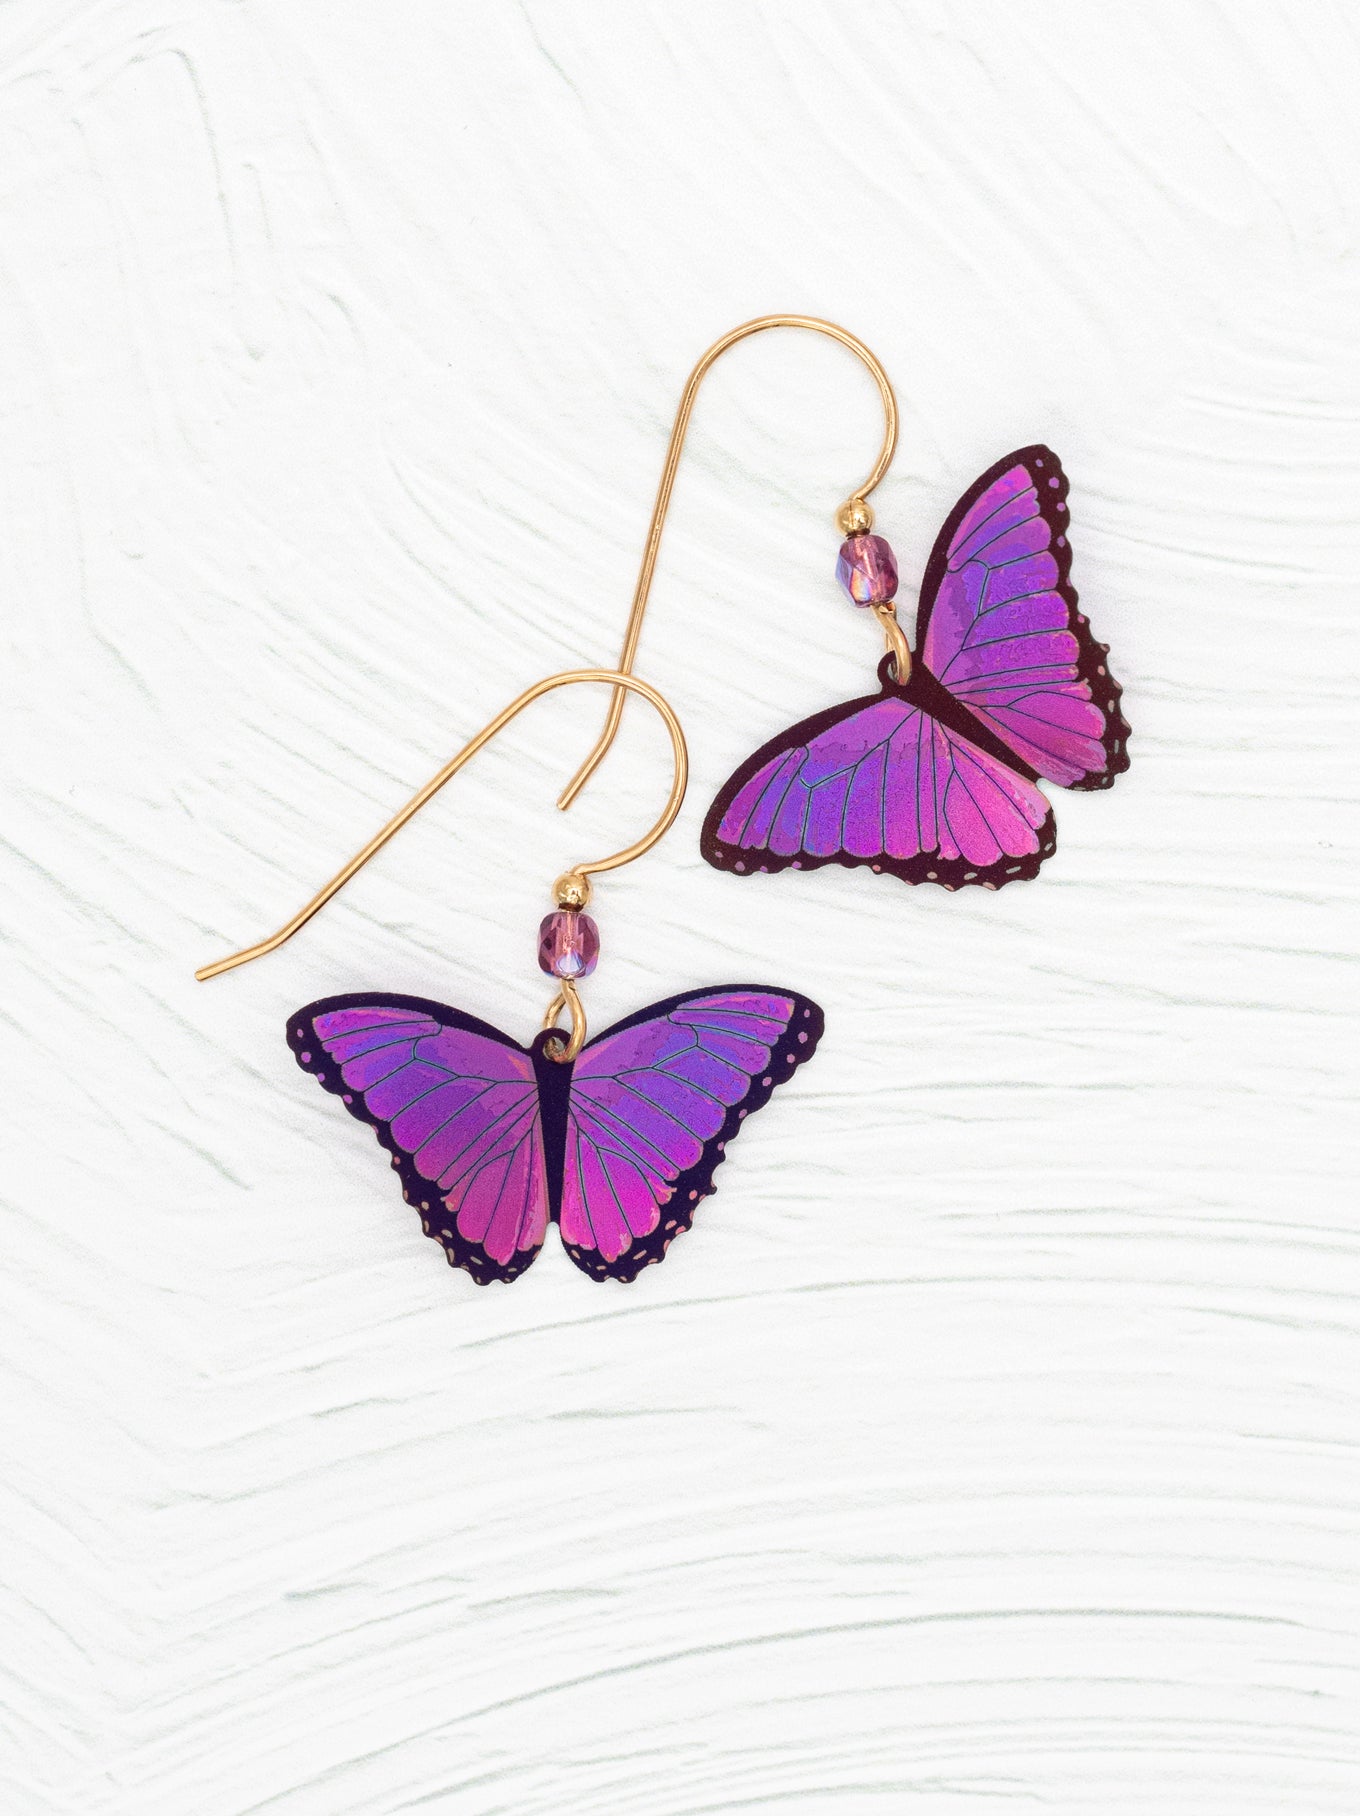 New Purple Butterfly Long Tassel Pendant Earrings at Rs 65/pair in Jaipur